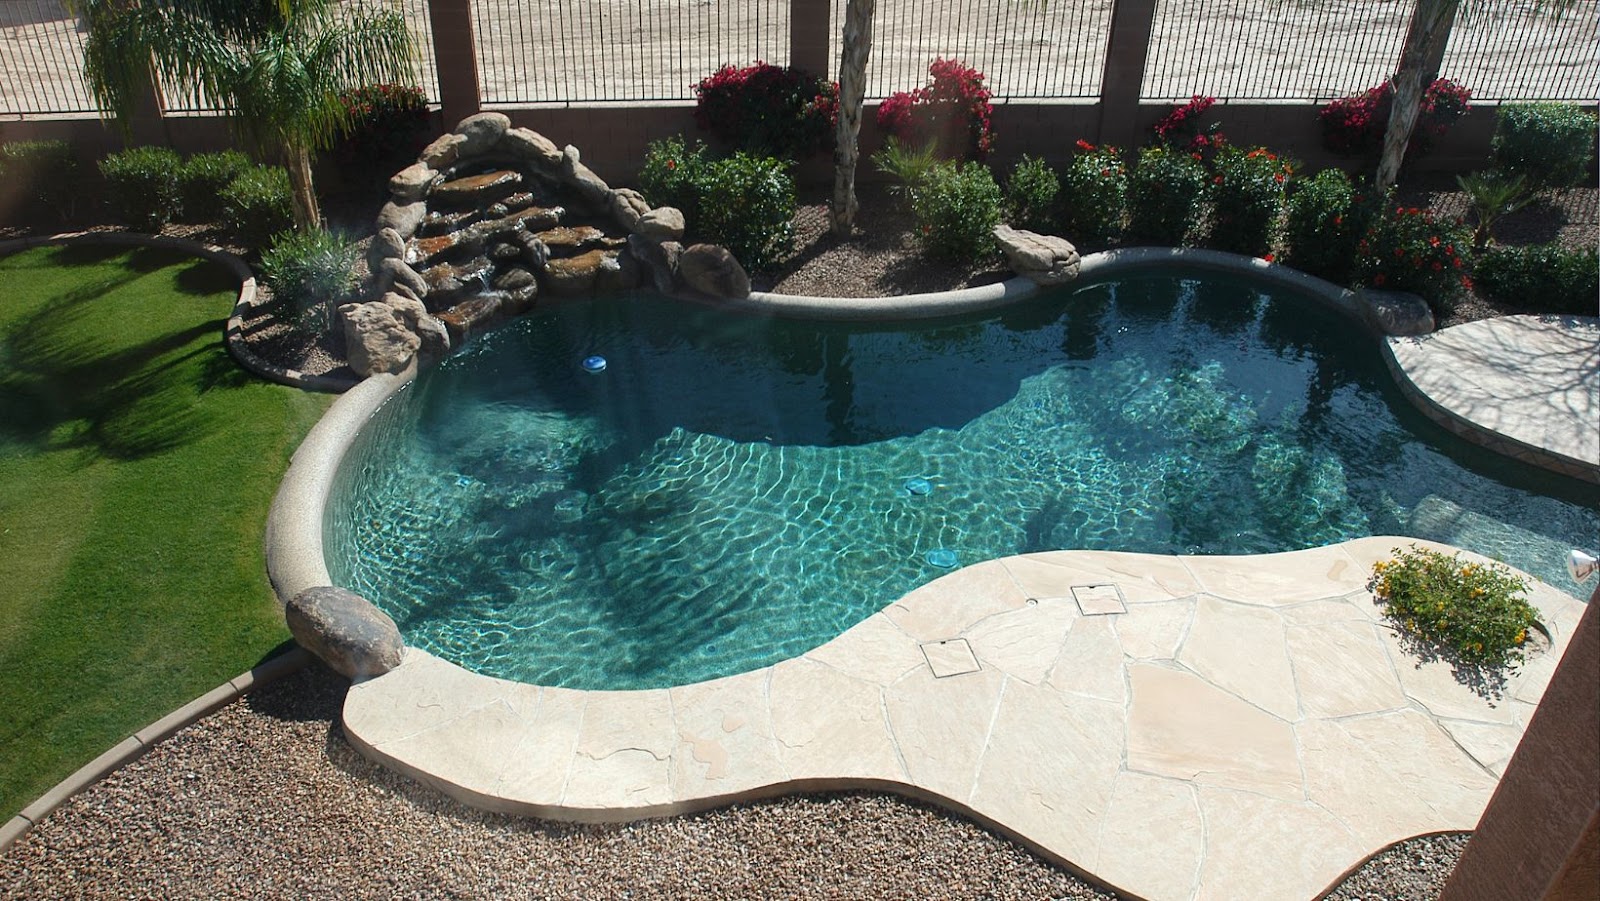 How deep can a backyard pool be-8